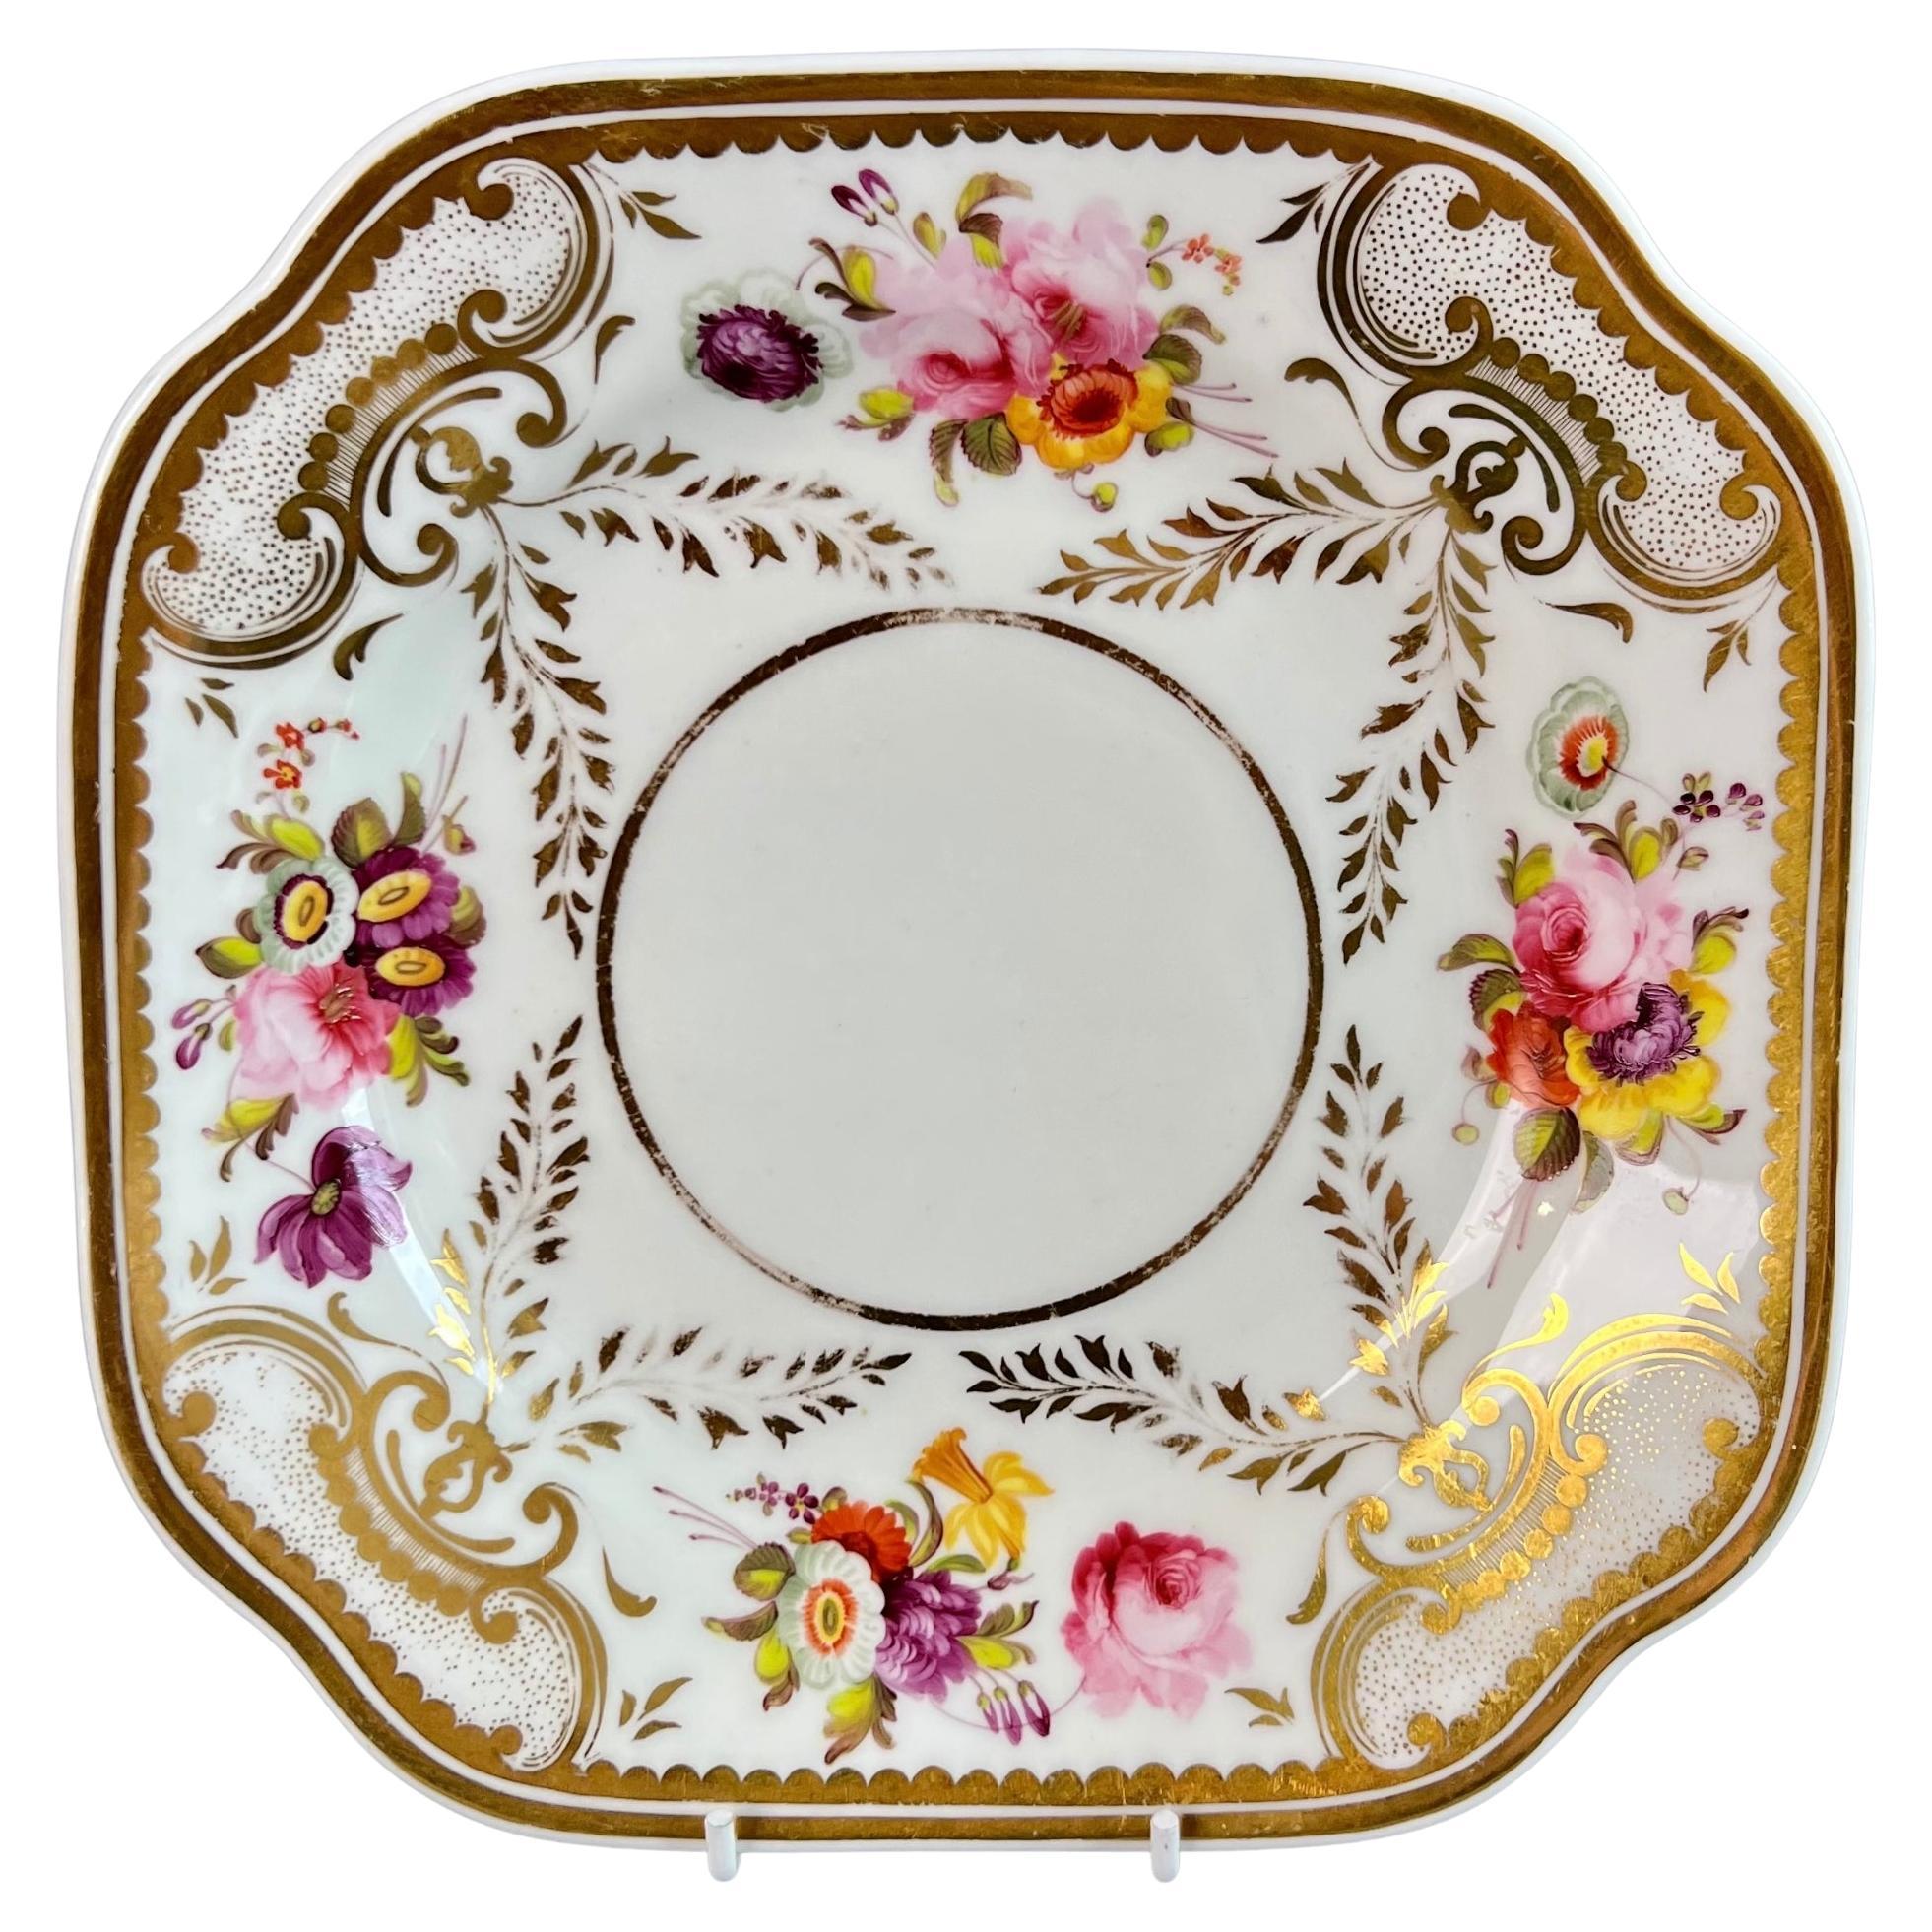 H&R Daniel Plate, White, Floral, Etruscan Shape, Regency, circa 1825